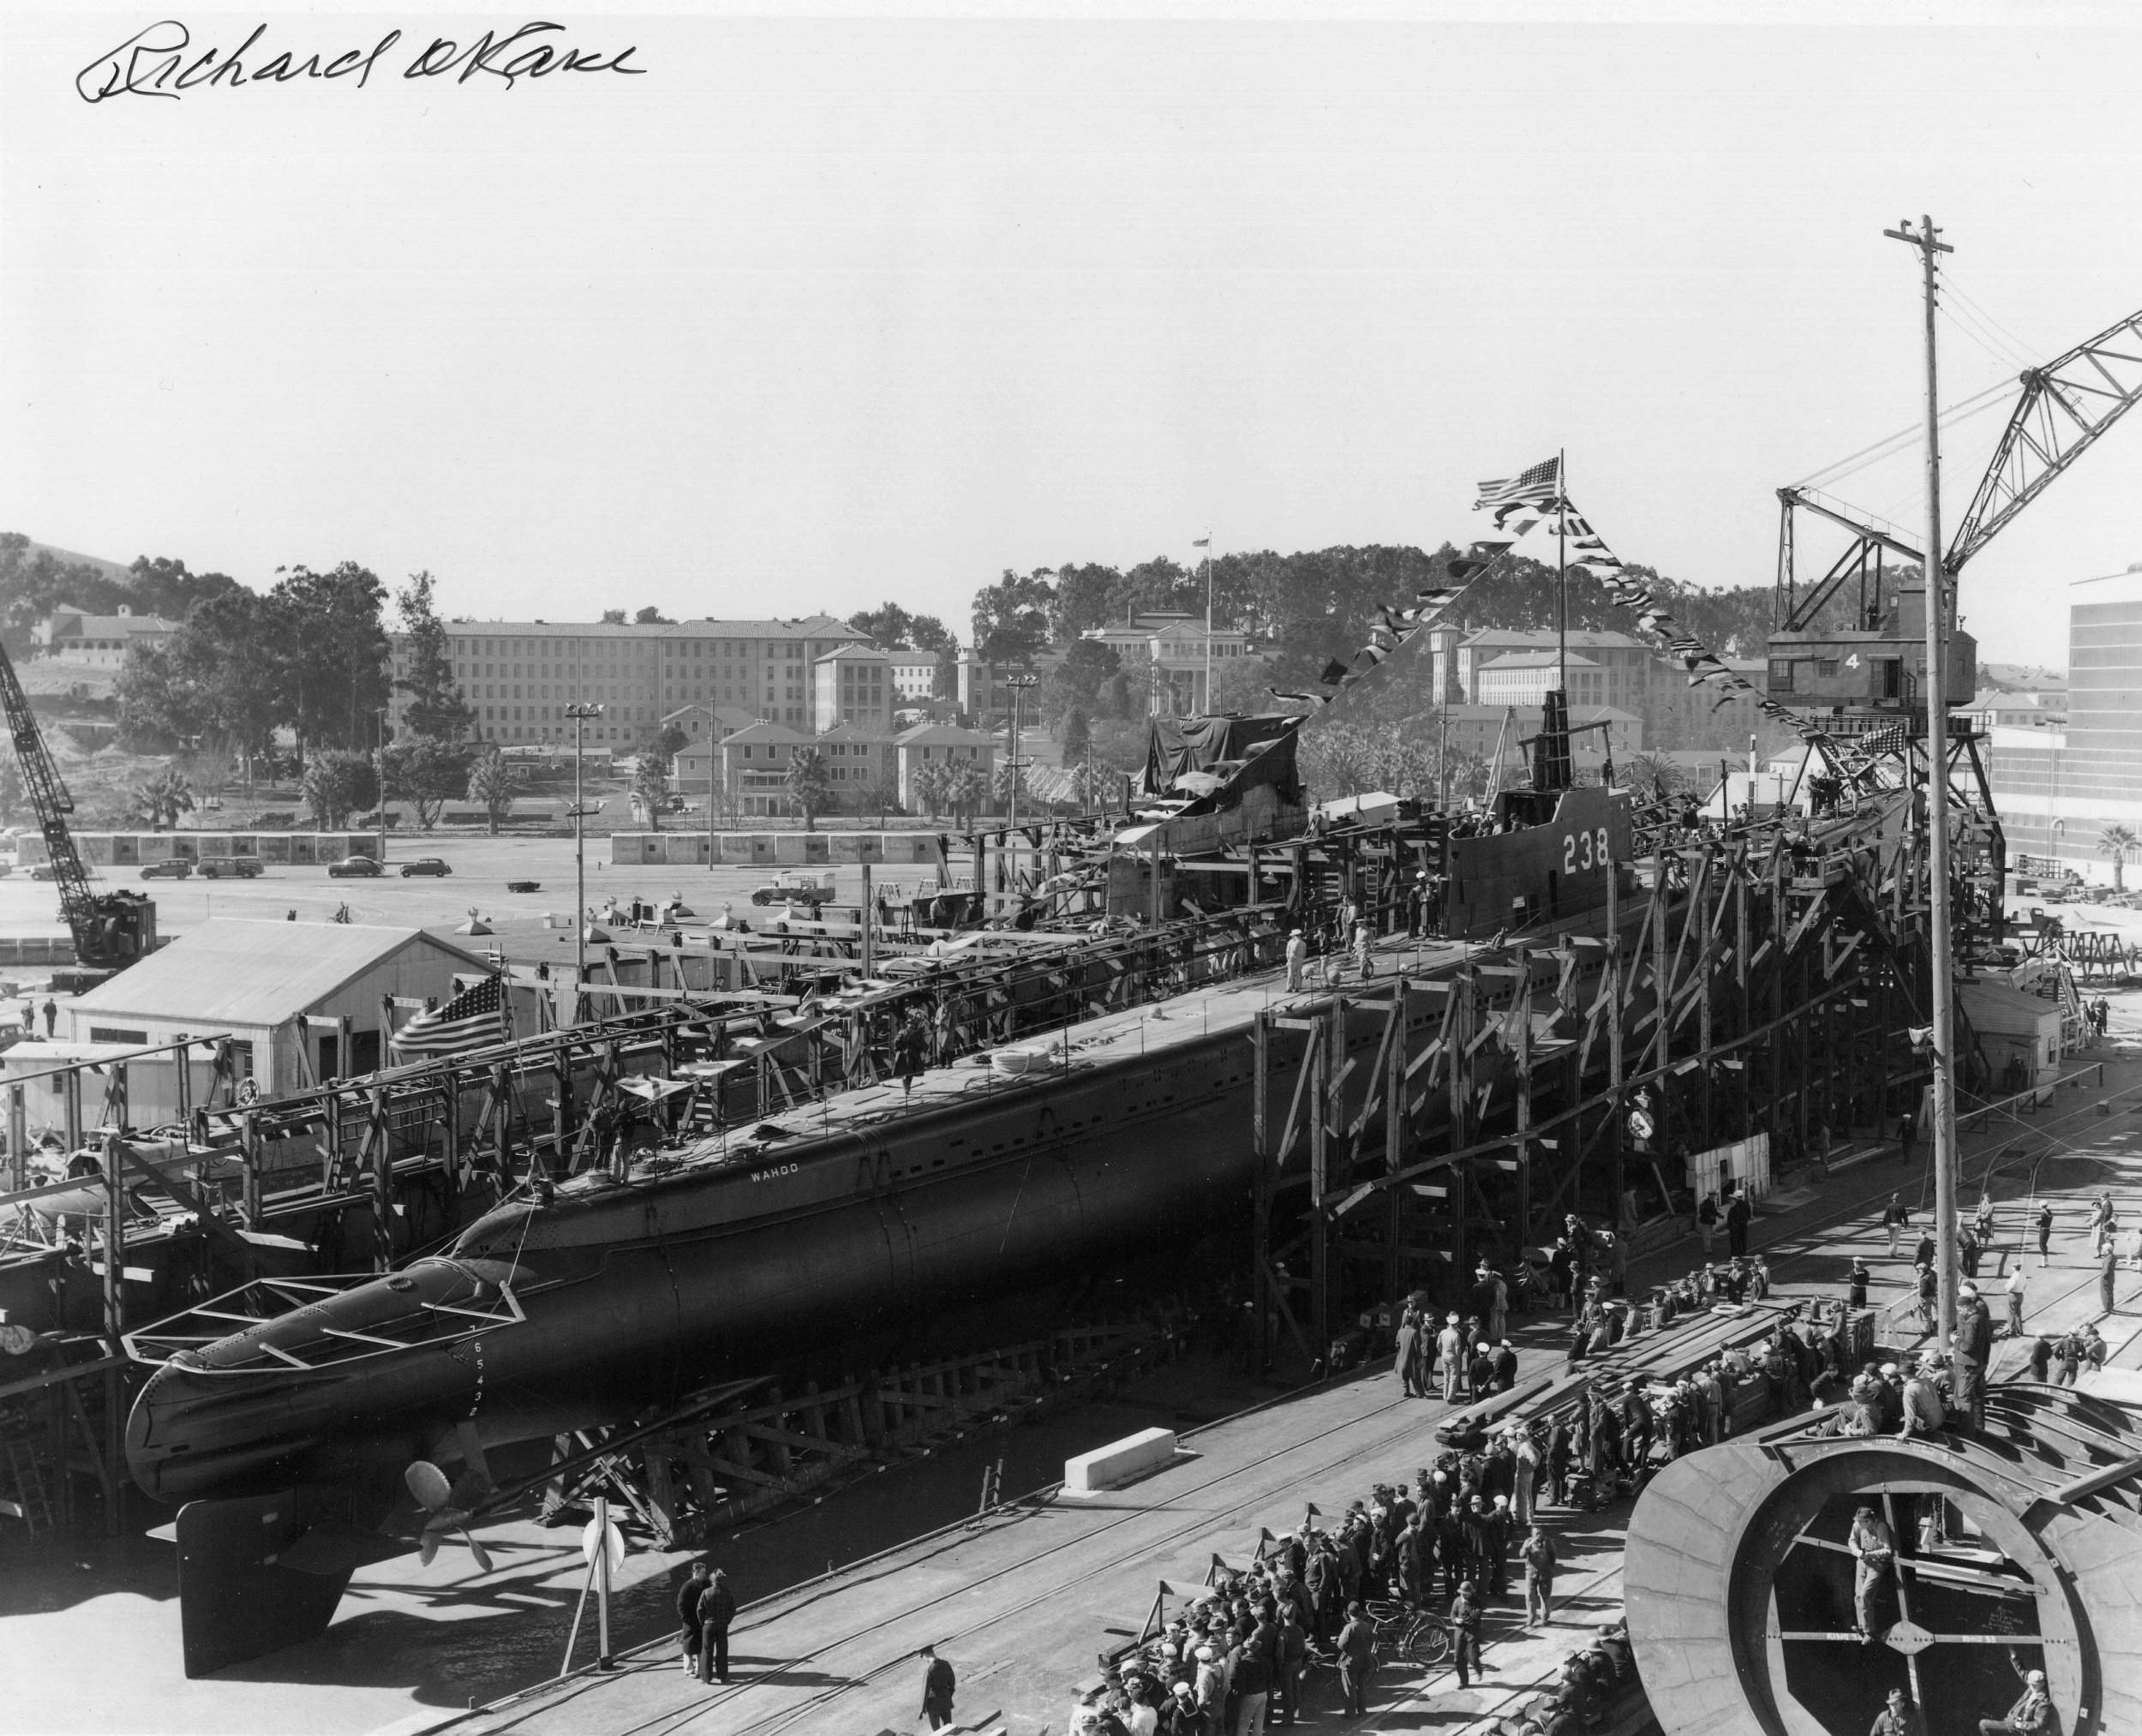 Launching of submarine Wahoo, Mare Island Navy Yard, Vallejo, California, United States, 14 Feb 1942, photo 1 of 4; note submarine Whale nearby